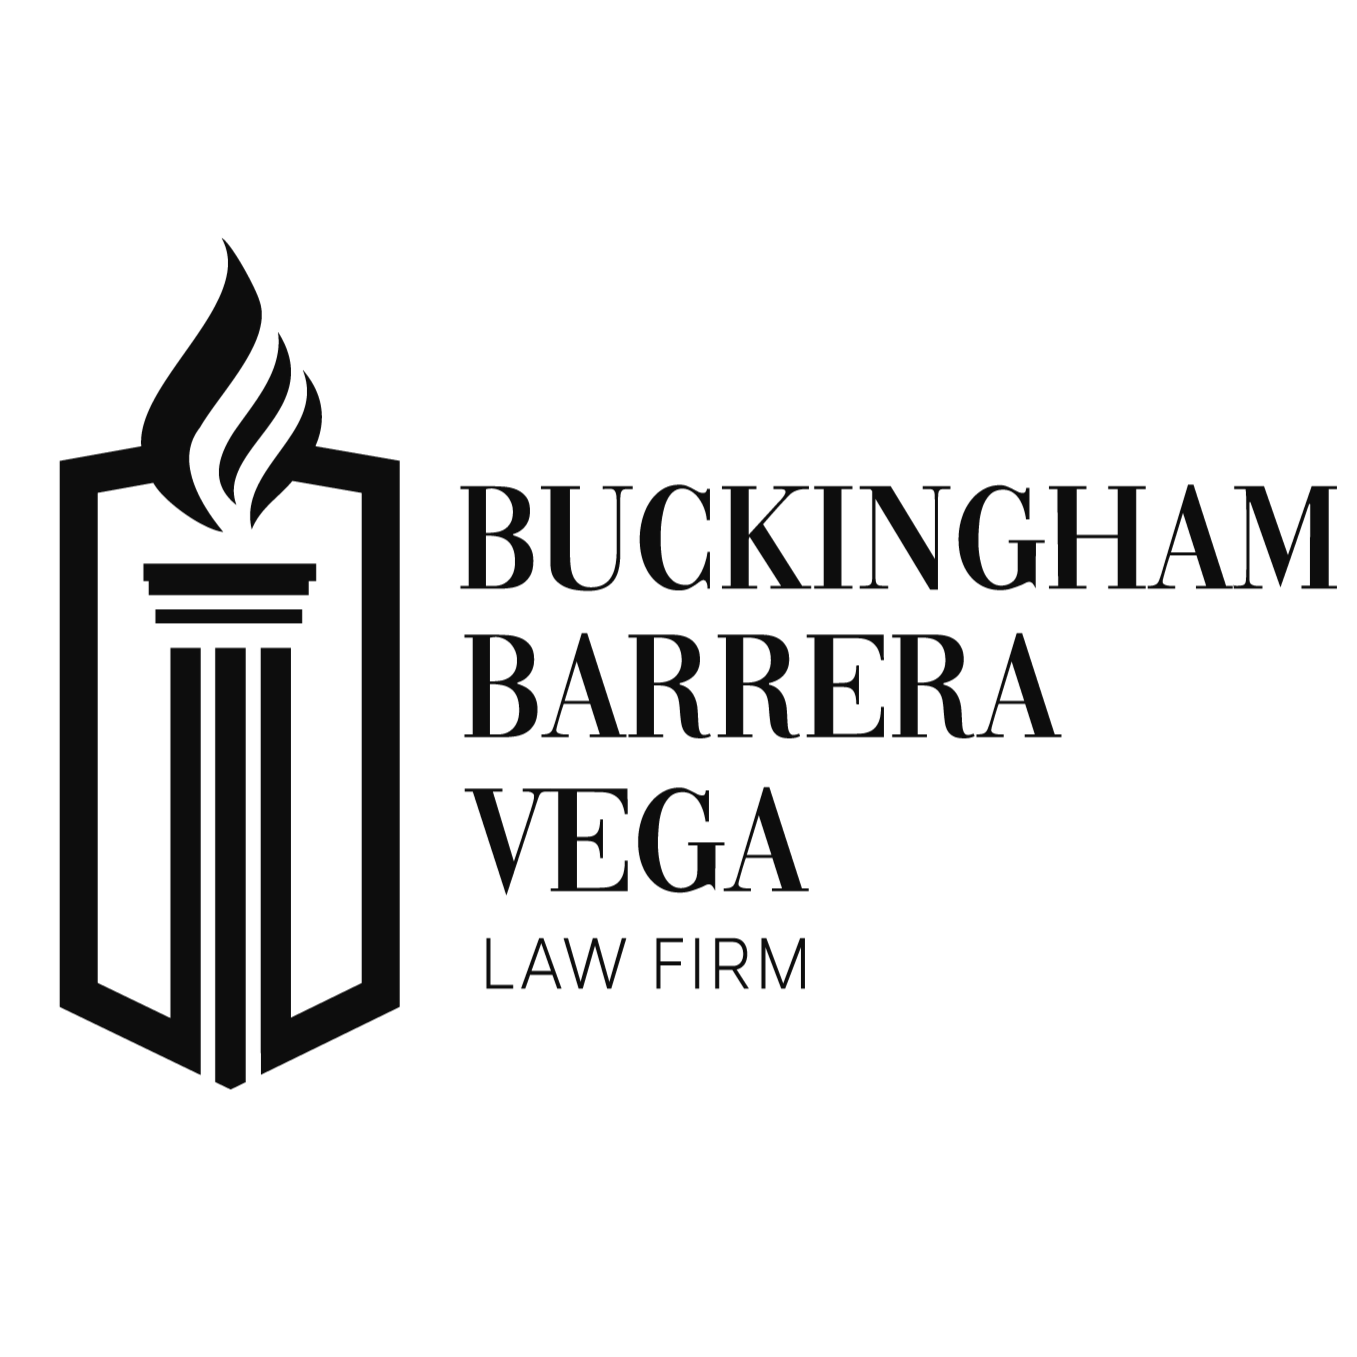 Buckingham Barrera Vega Law Firm